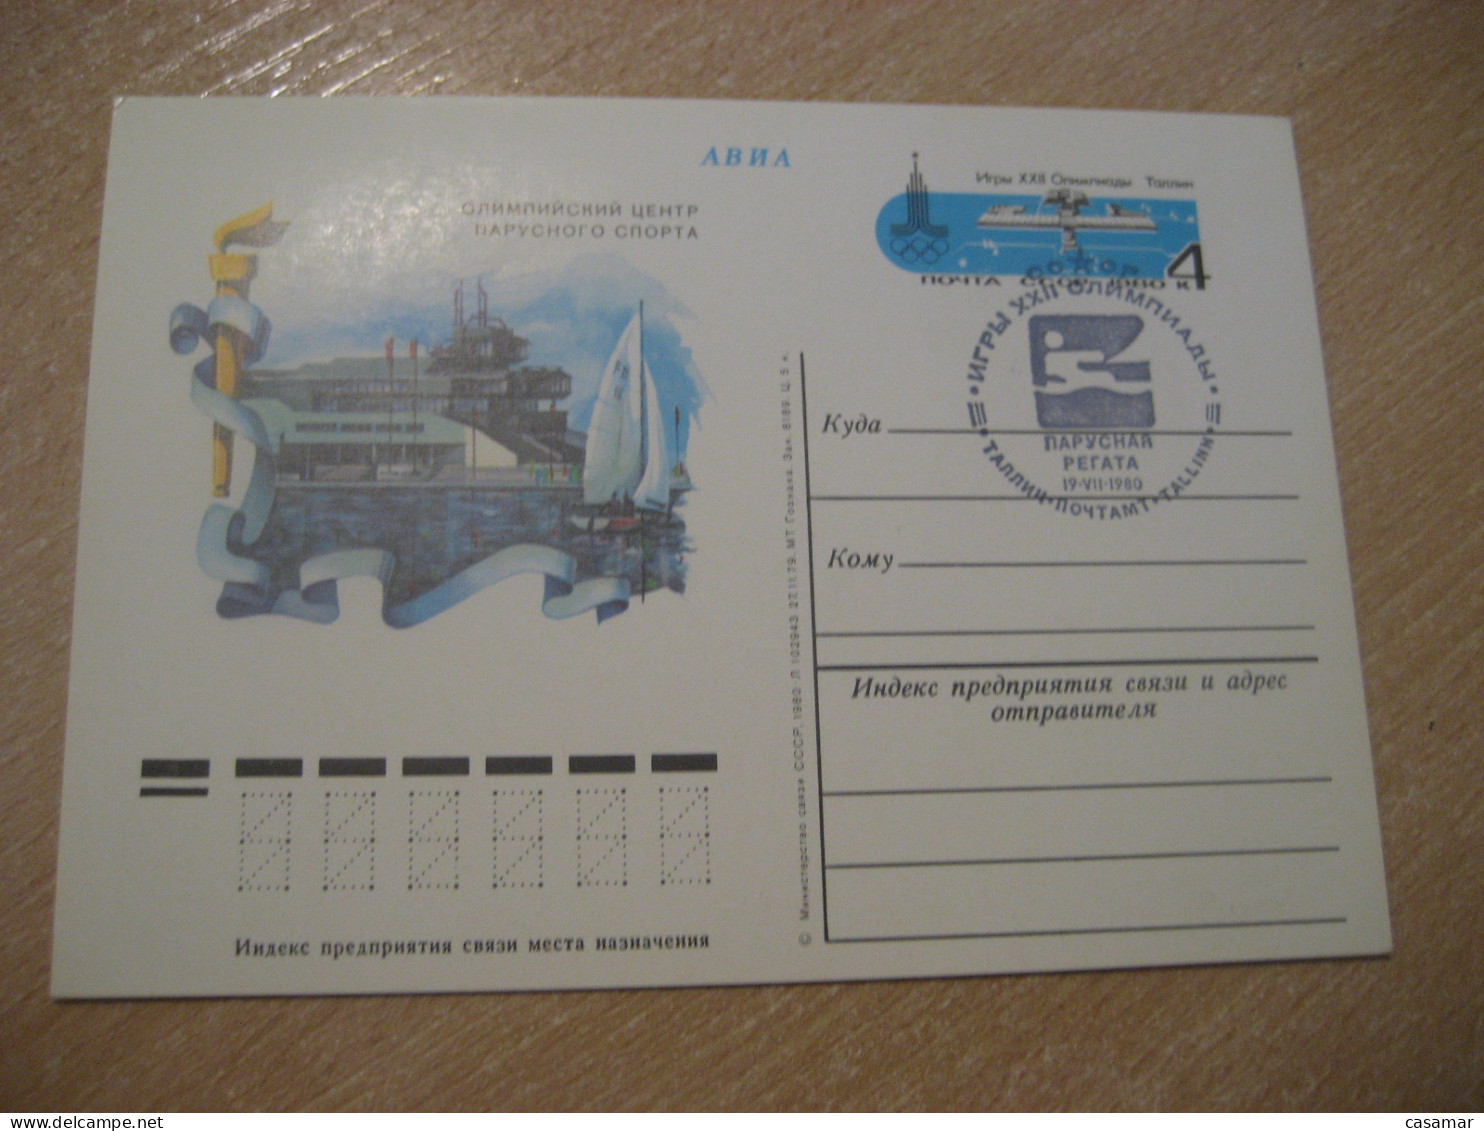 TALLINN 1980 Sail Sailing Moscow Olympic Games Olympics Torch Cancel Postal Stationery Card RUSSIA USSR - Sommer 1980: Moskau